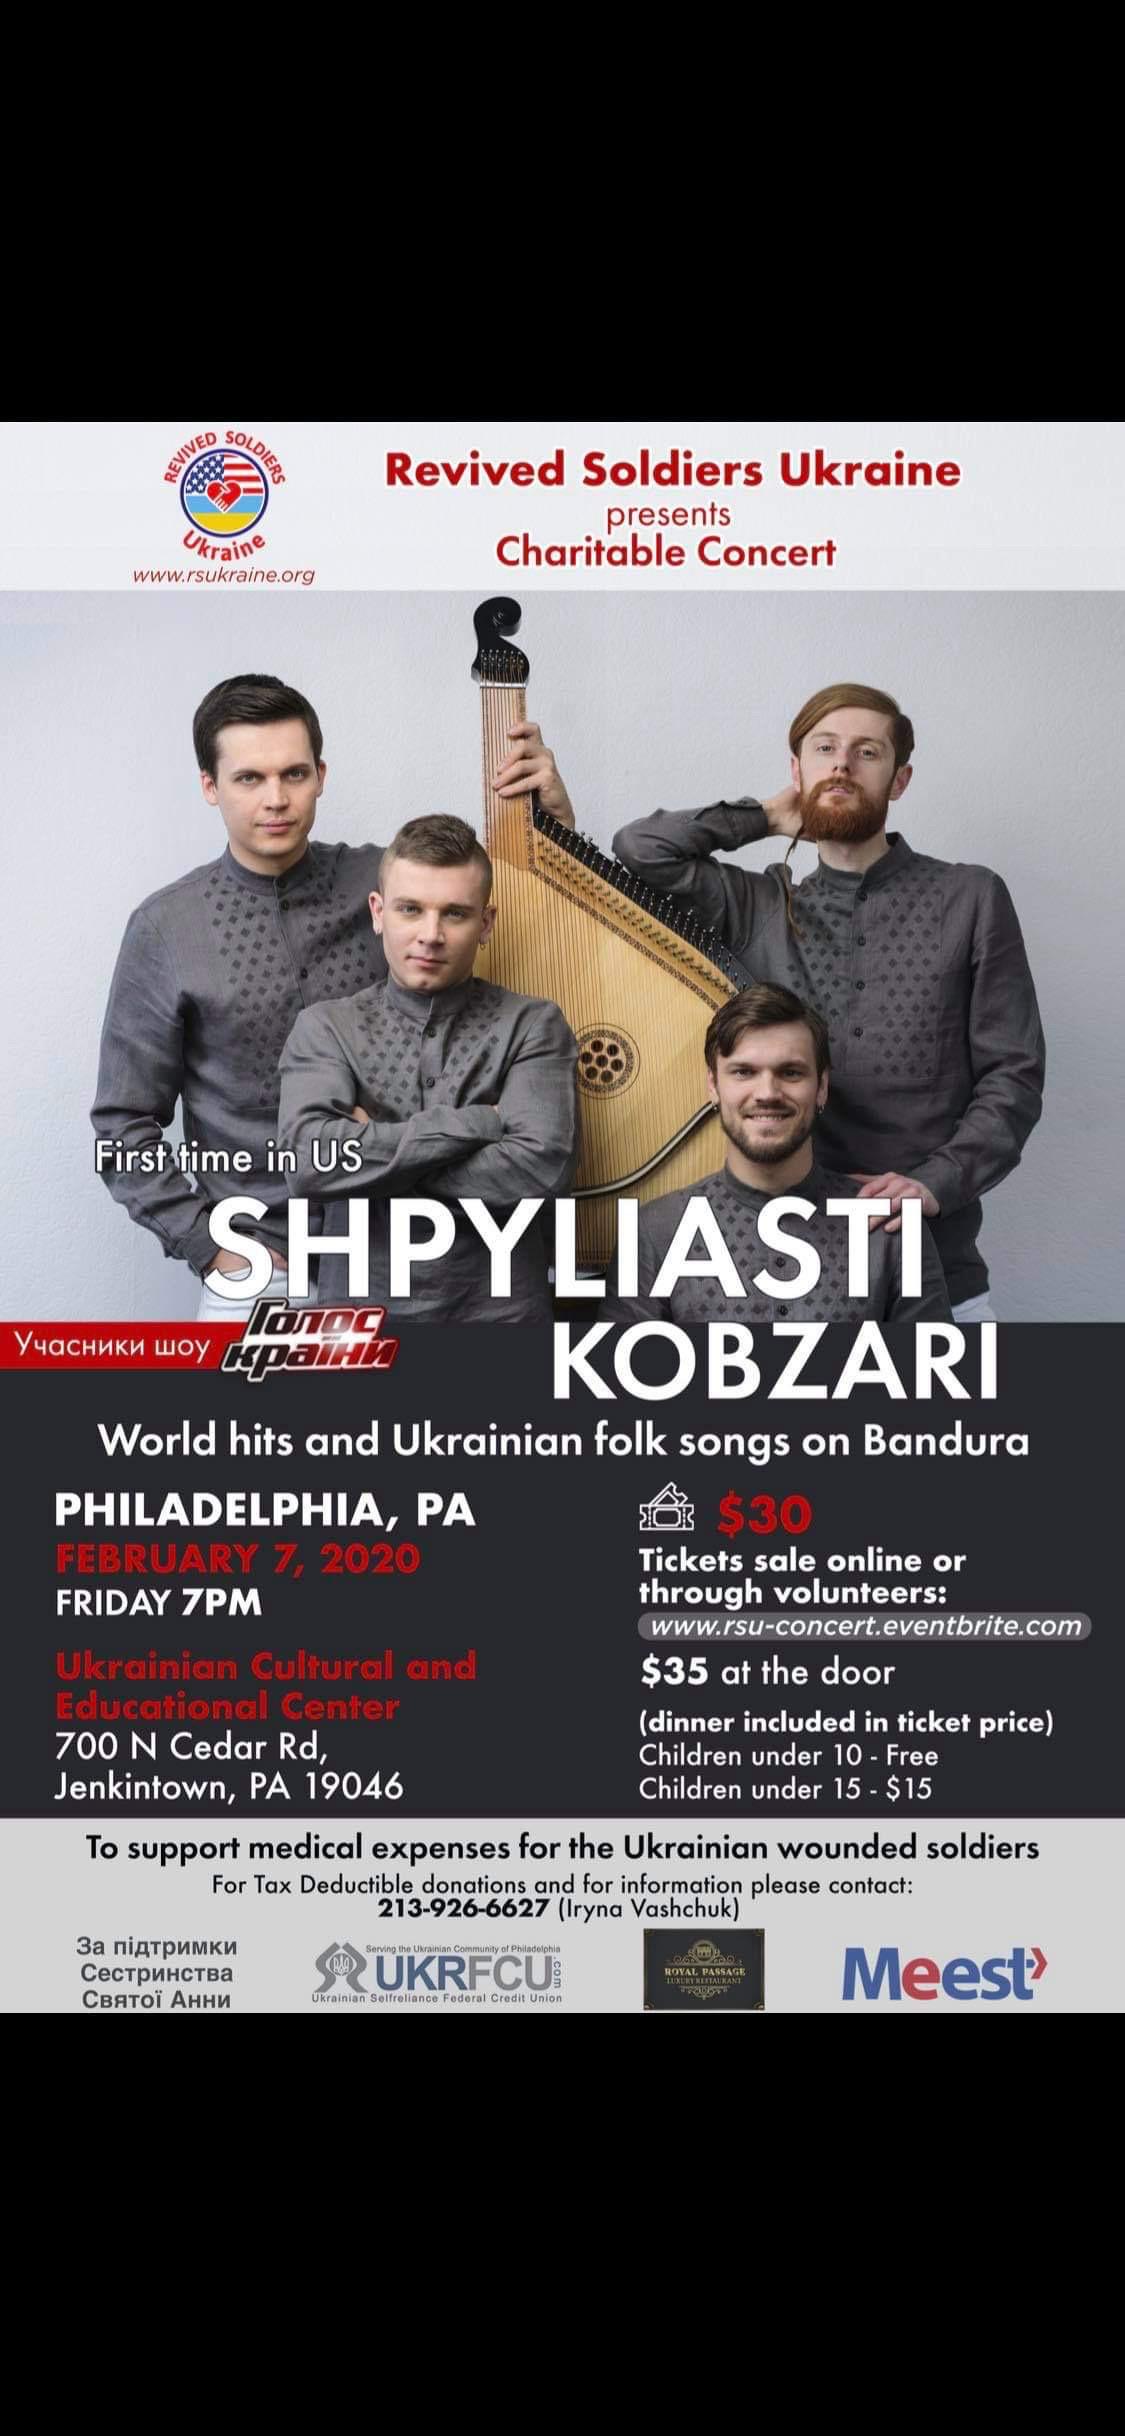 Detroit, MI - Shpyliasti Kobzari charitable concert by Revived Soldiers Ukraine